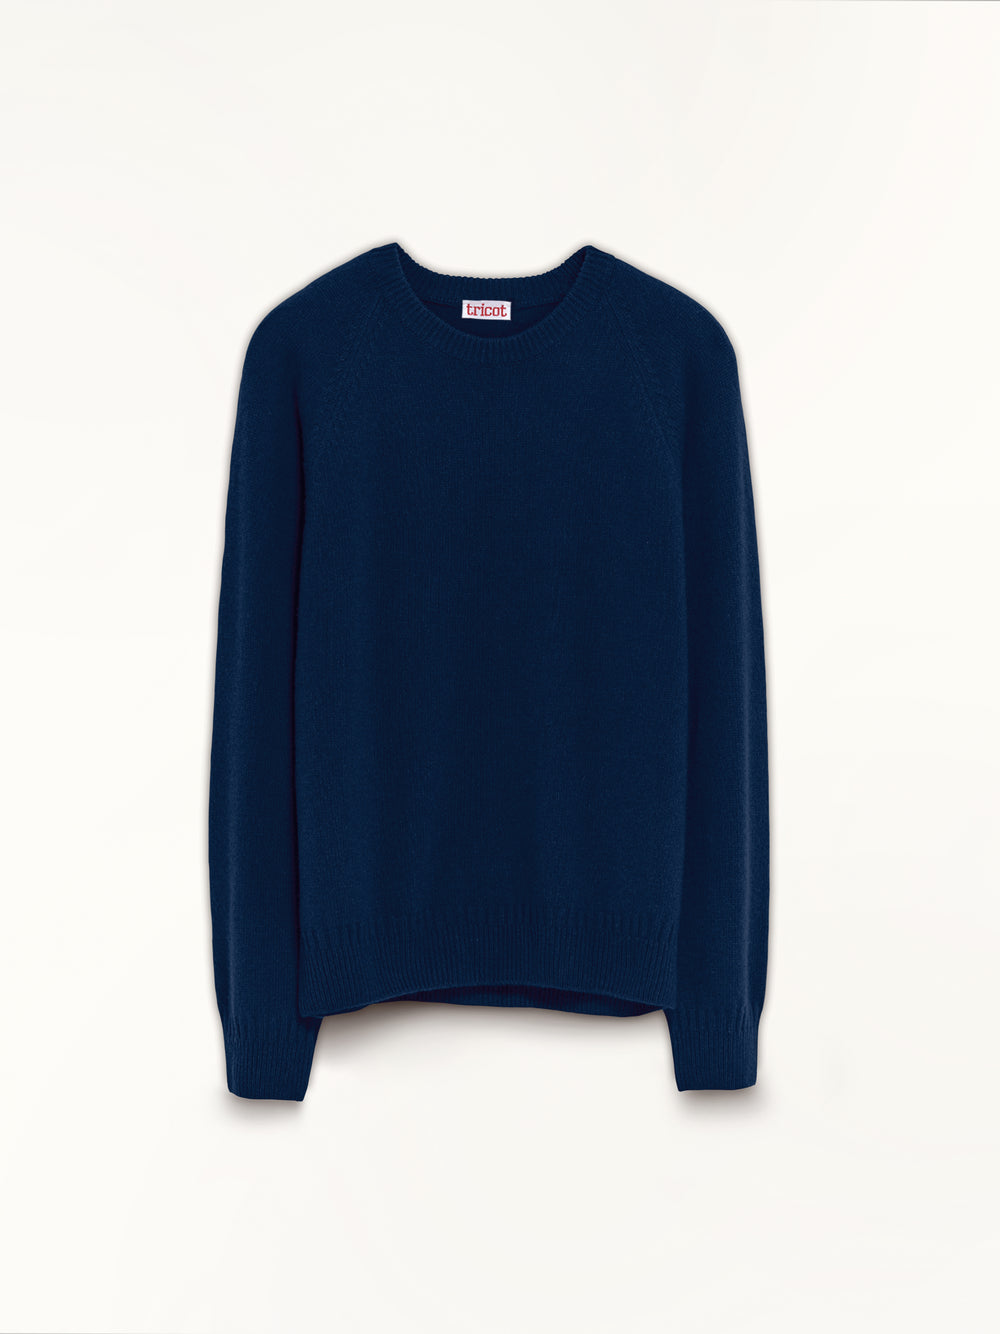 Men's cashmere crewneck sweater in Navy blue